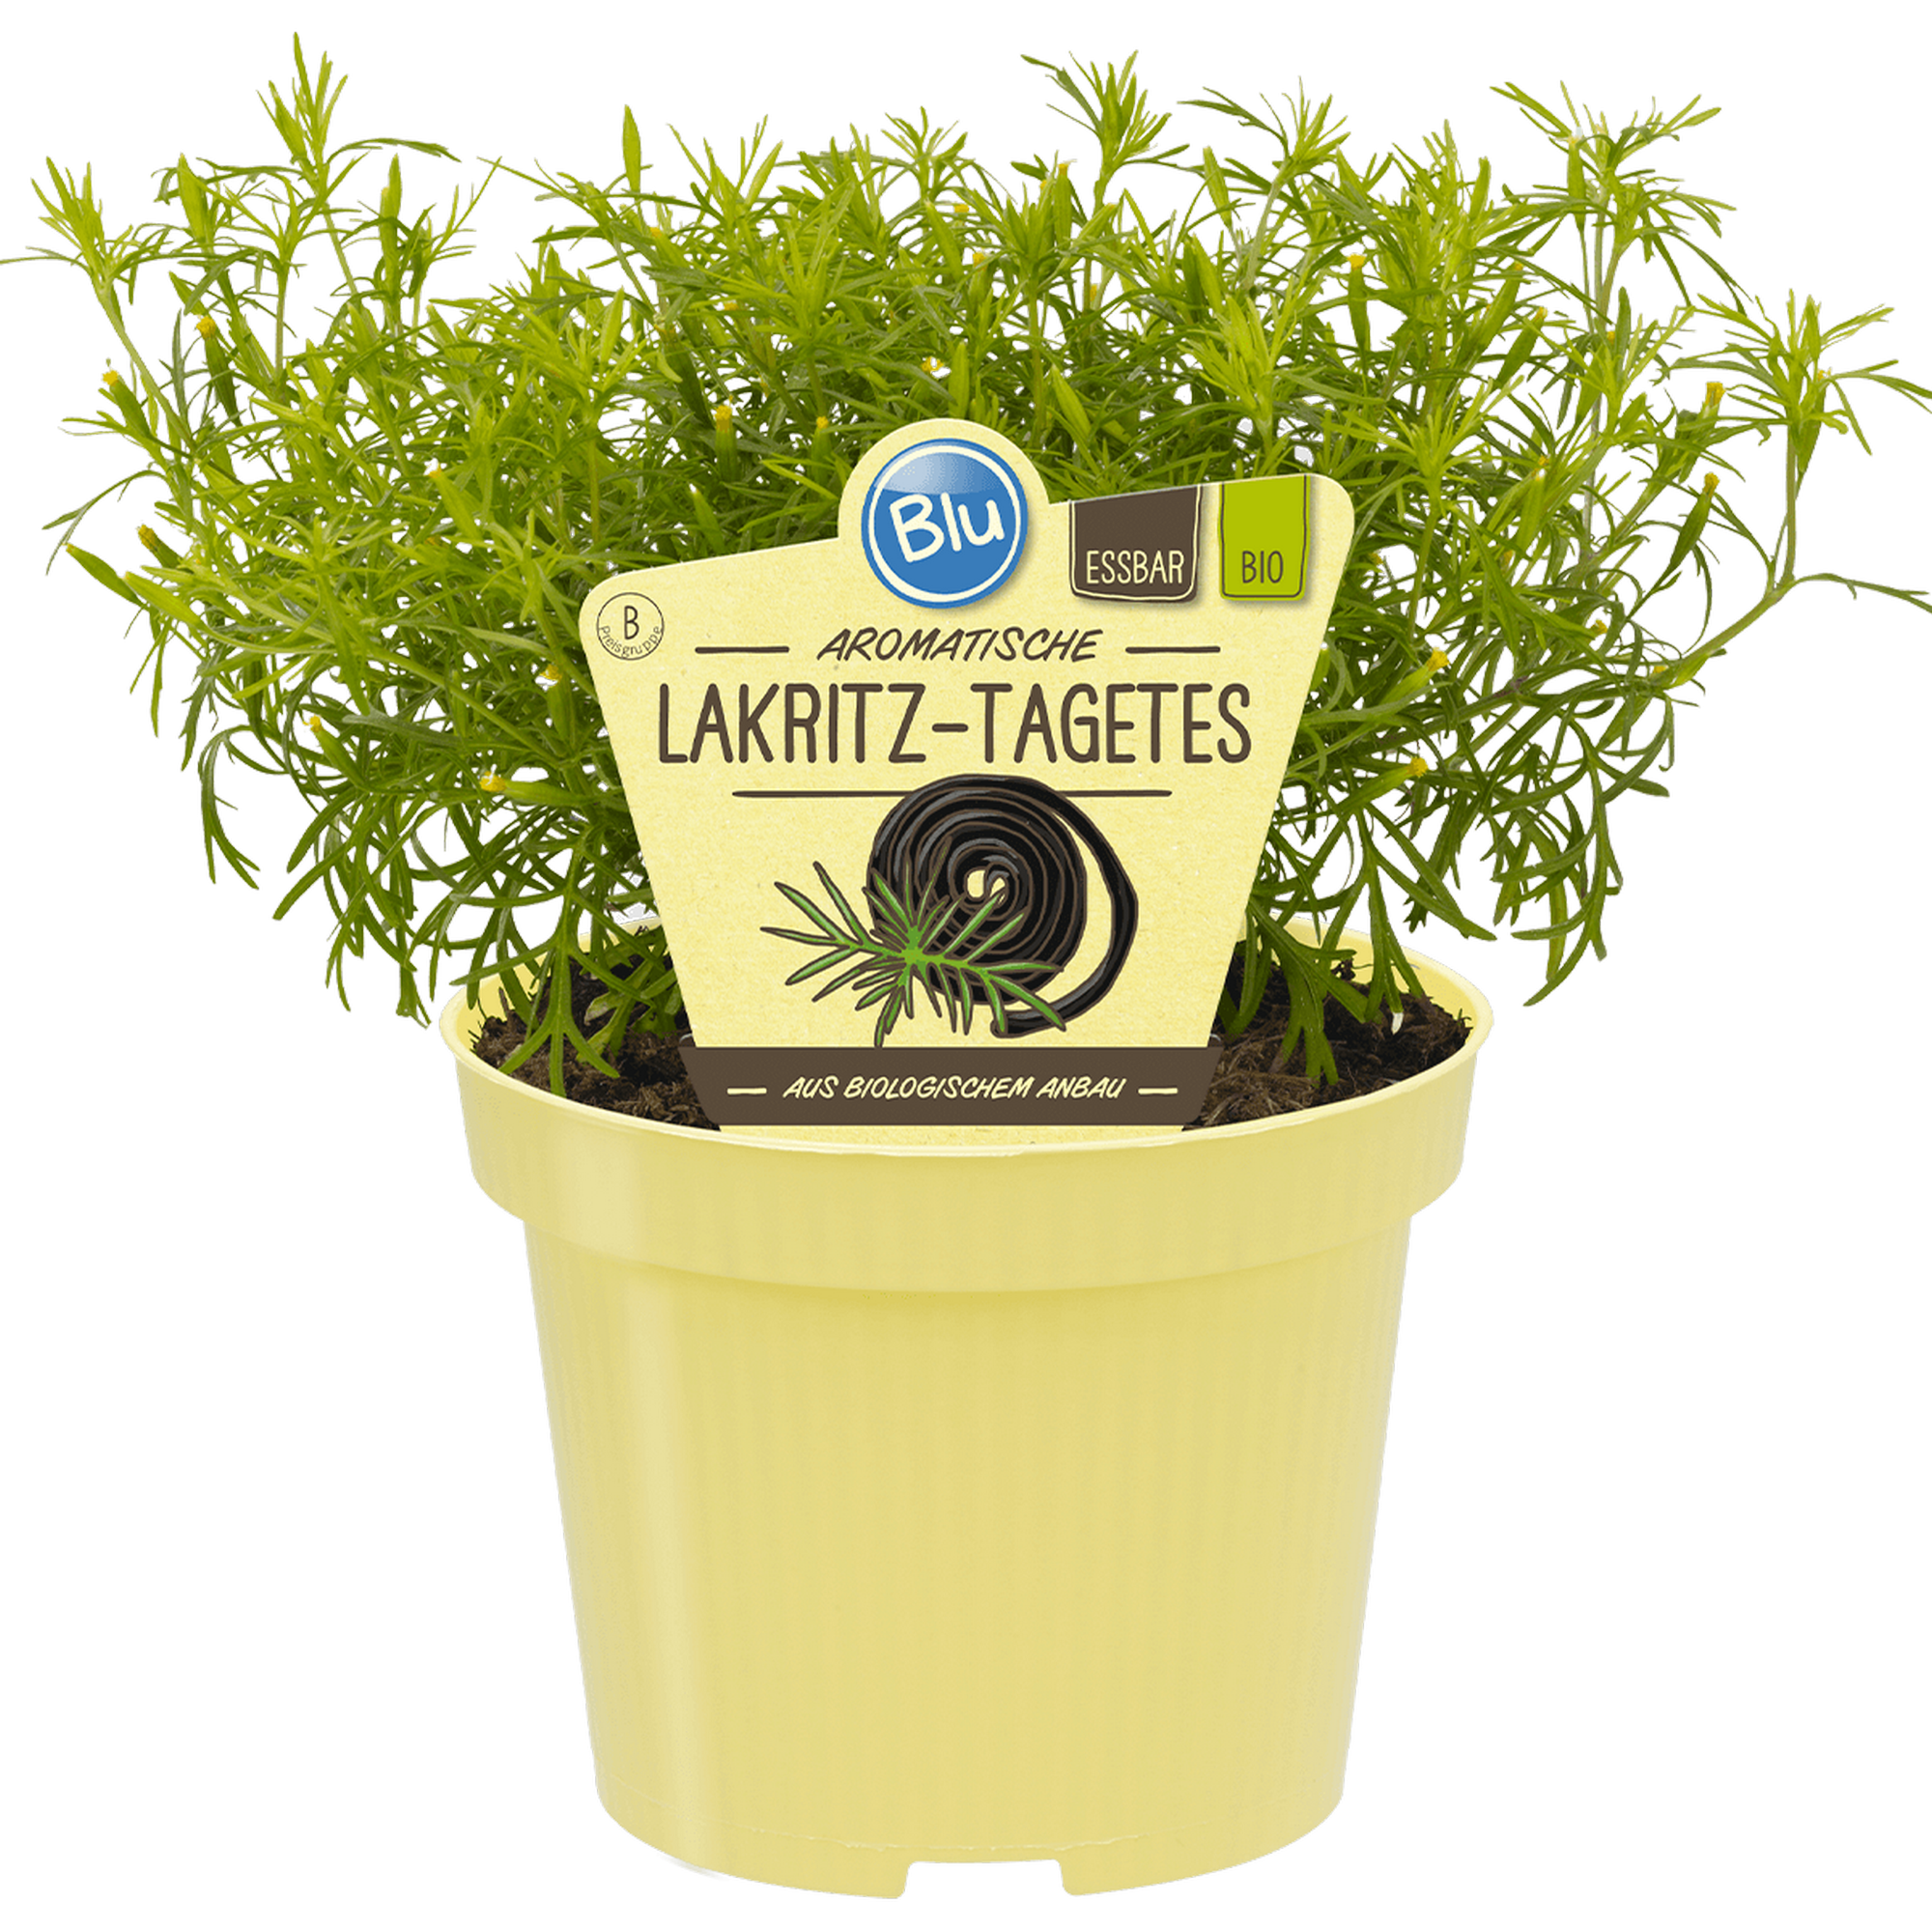 Bio-Tagetes 'Lakritztagetes' 12 cm Topf + product picture